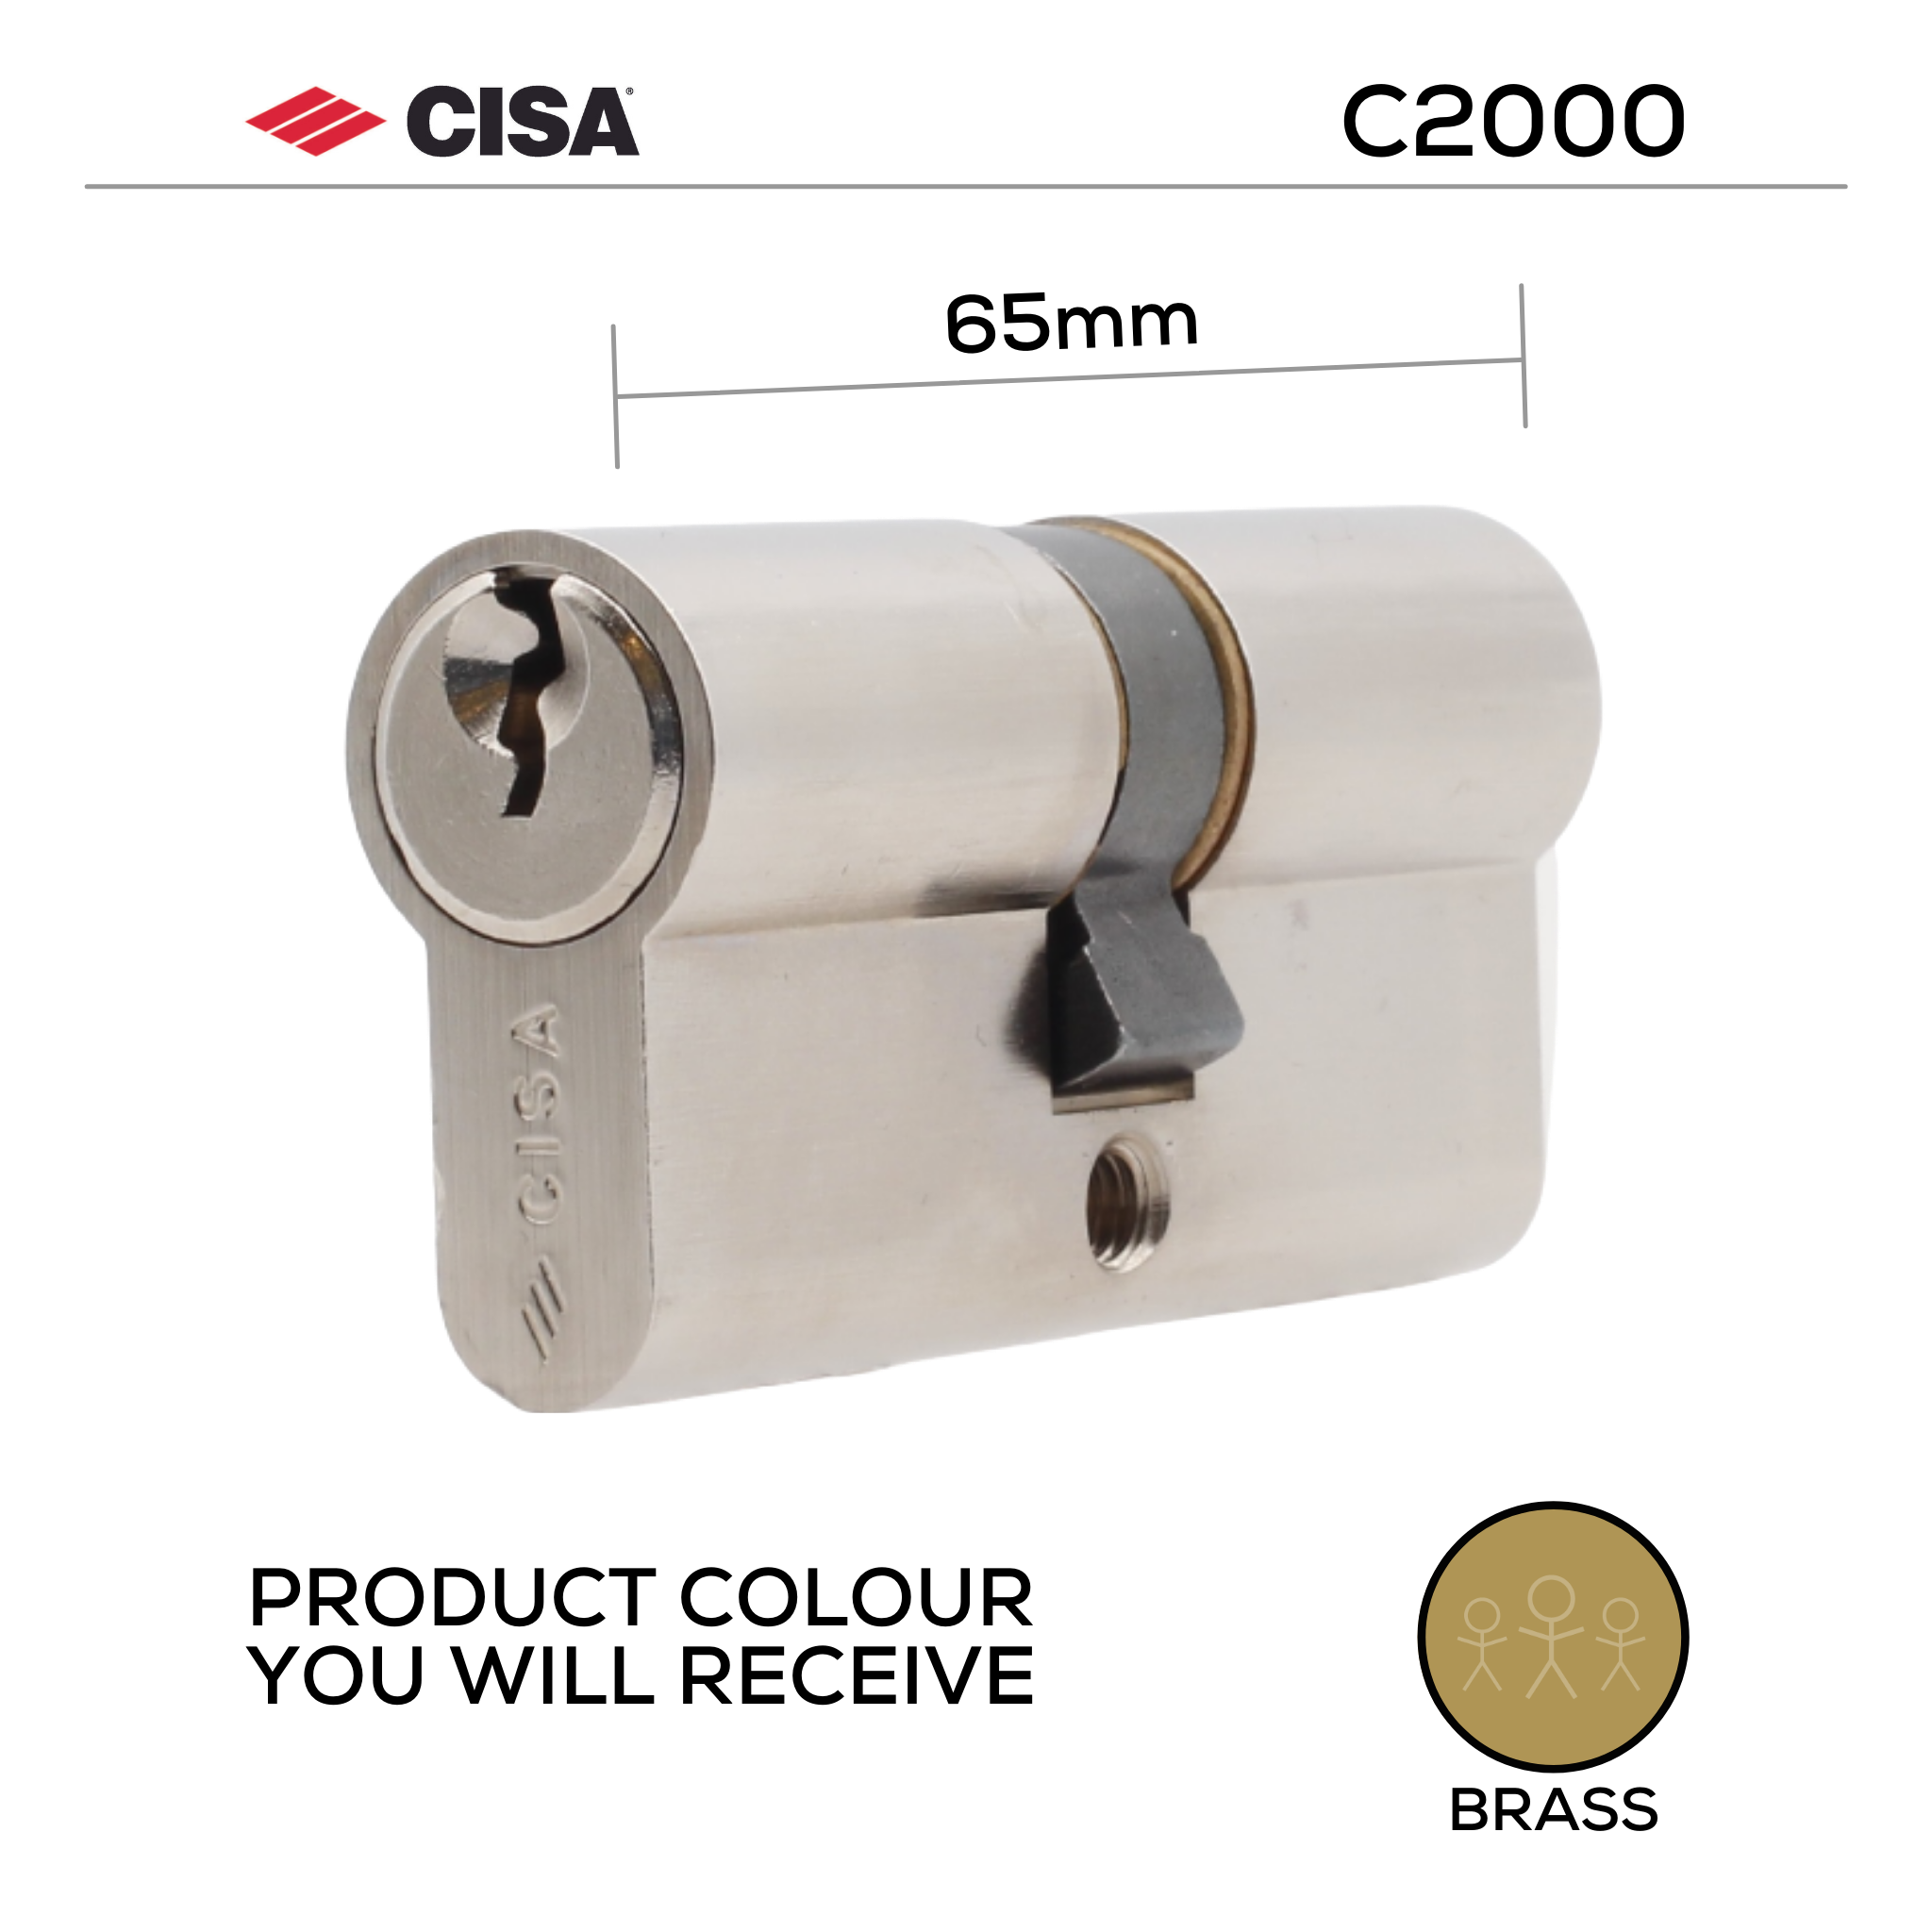 09010-10-00-KD, 65mm - 32.5/32.5, Oval Double Cylinder, C2000, Key to Key, Keyed to Differ (Standard), 3 Keys, 6 Pin, Brass, CISA